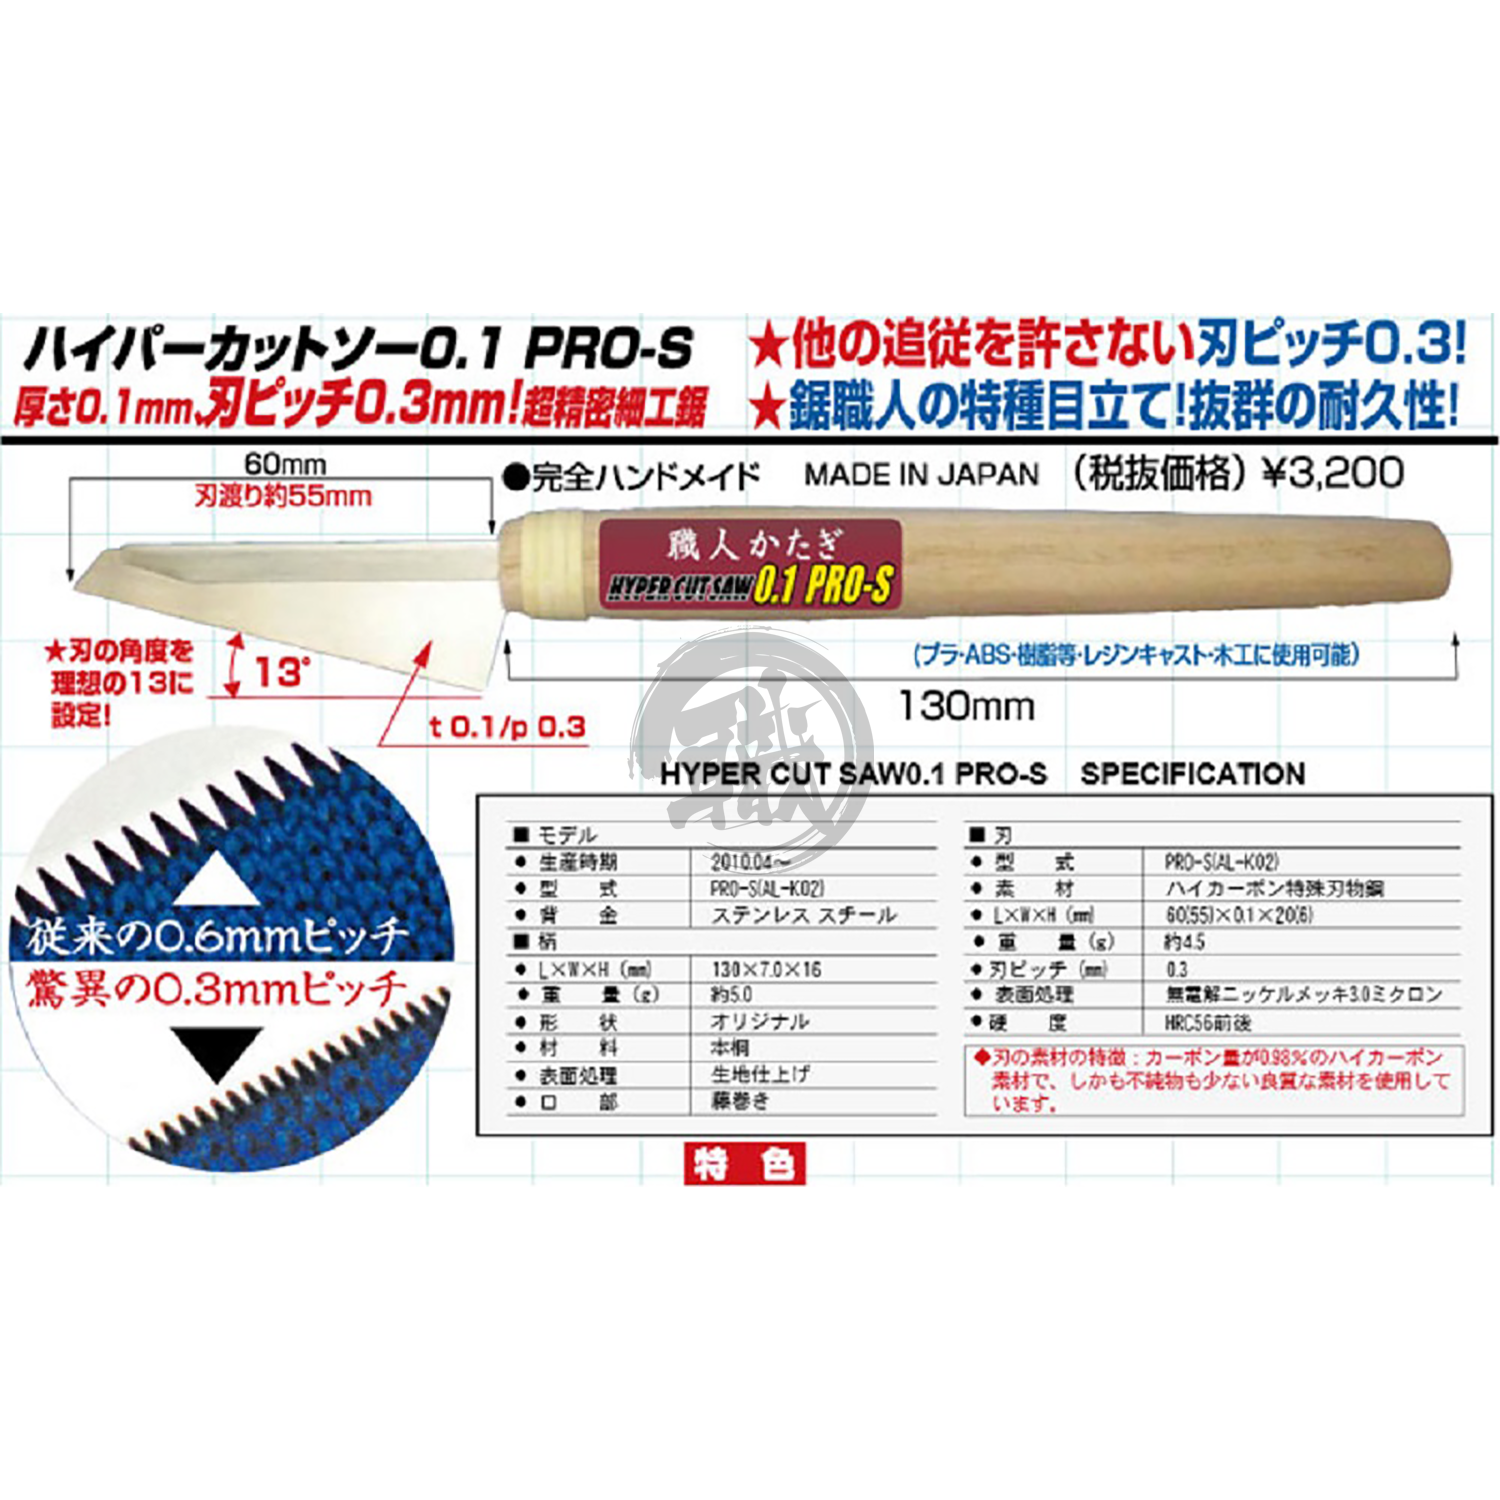 Shimomura ALEC - AL-K02 Hyper Cut Saw Pro-S - ShokuninGunpla